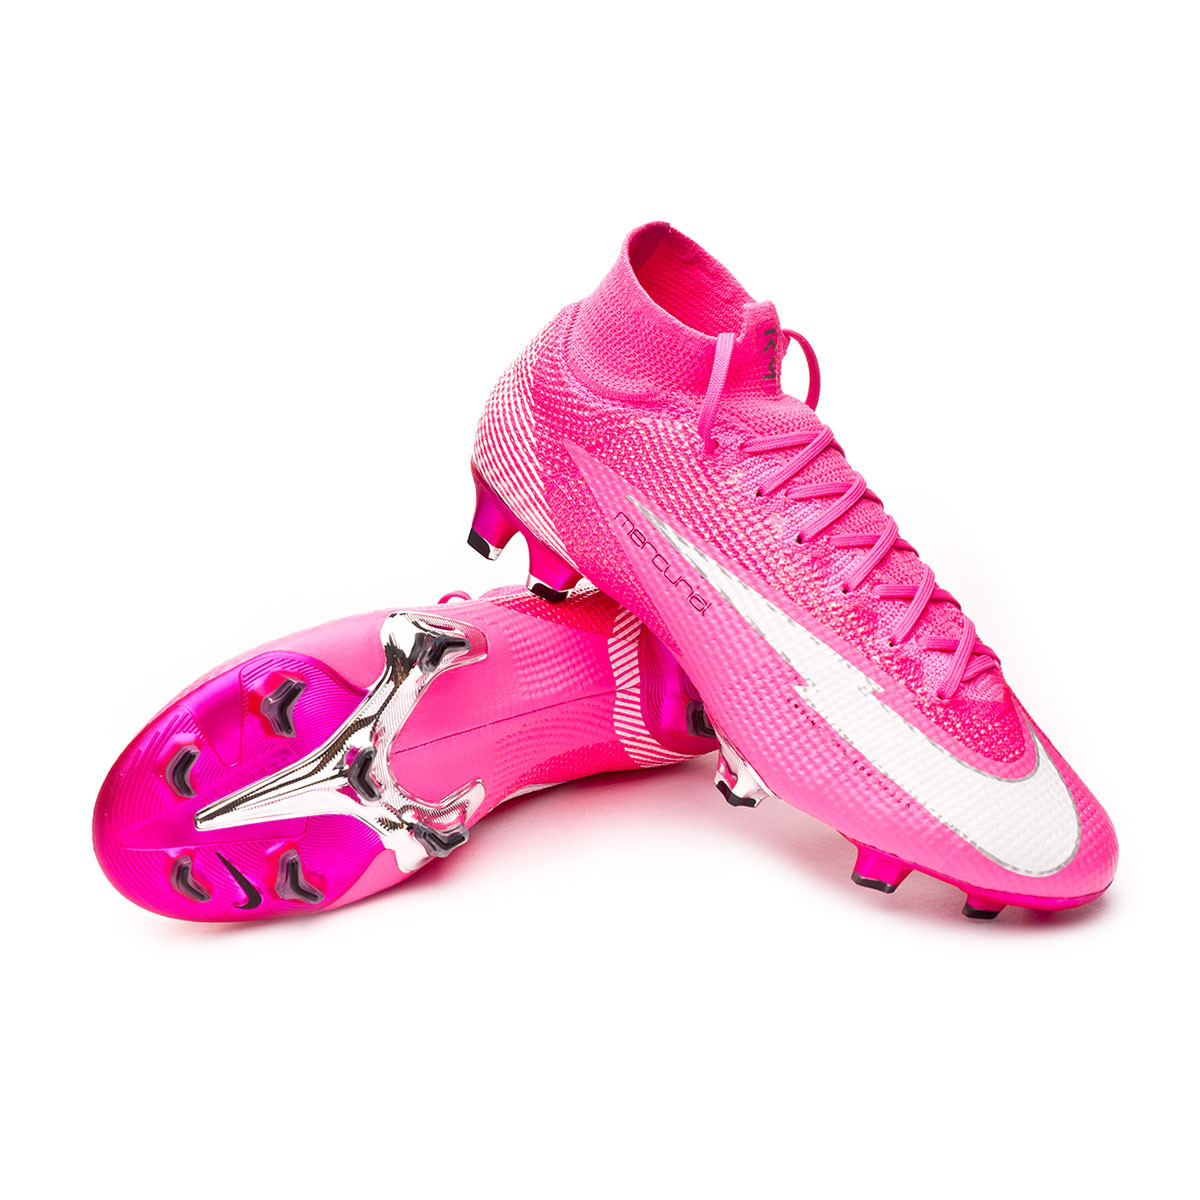 mbappe football shoes